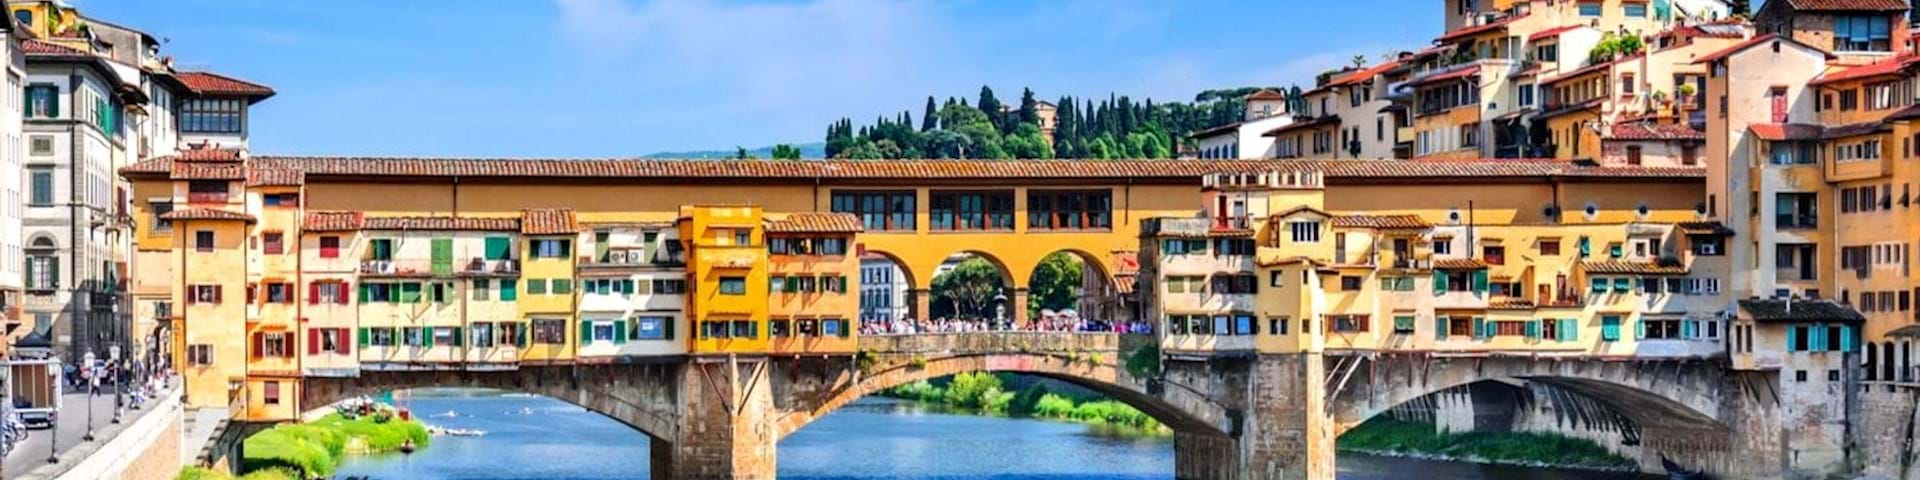 Ponte Vecchio Tours